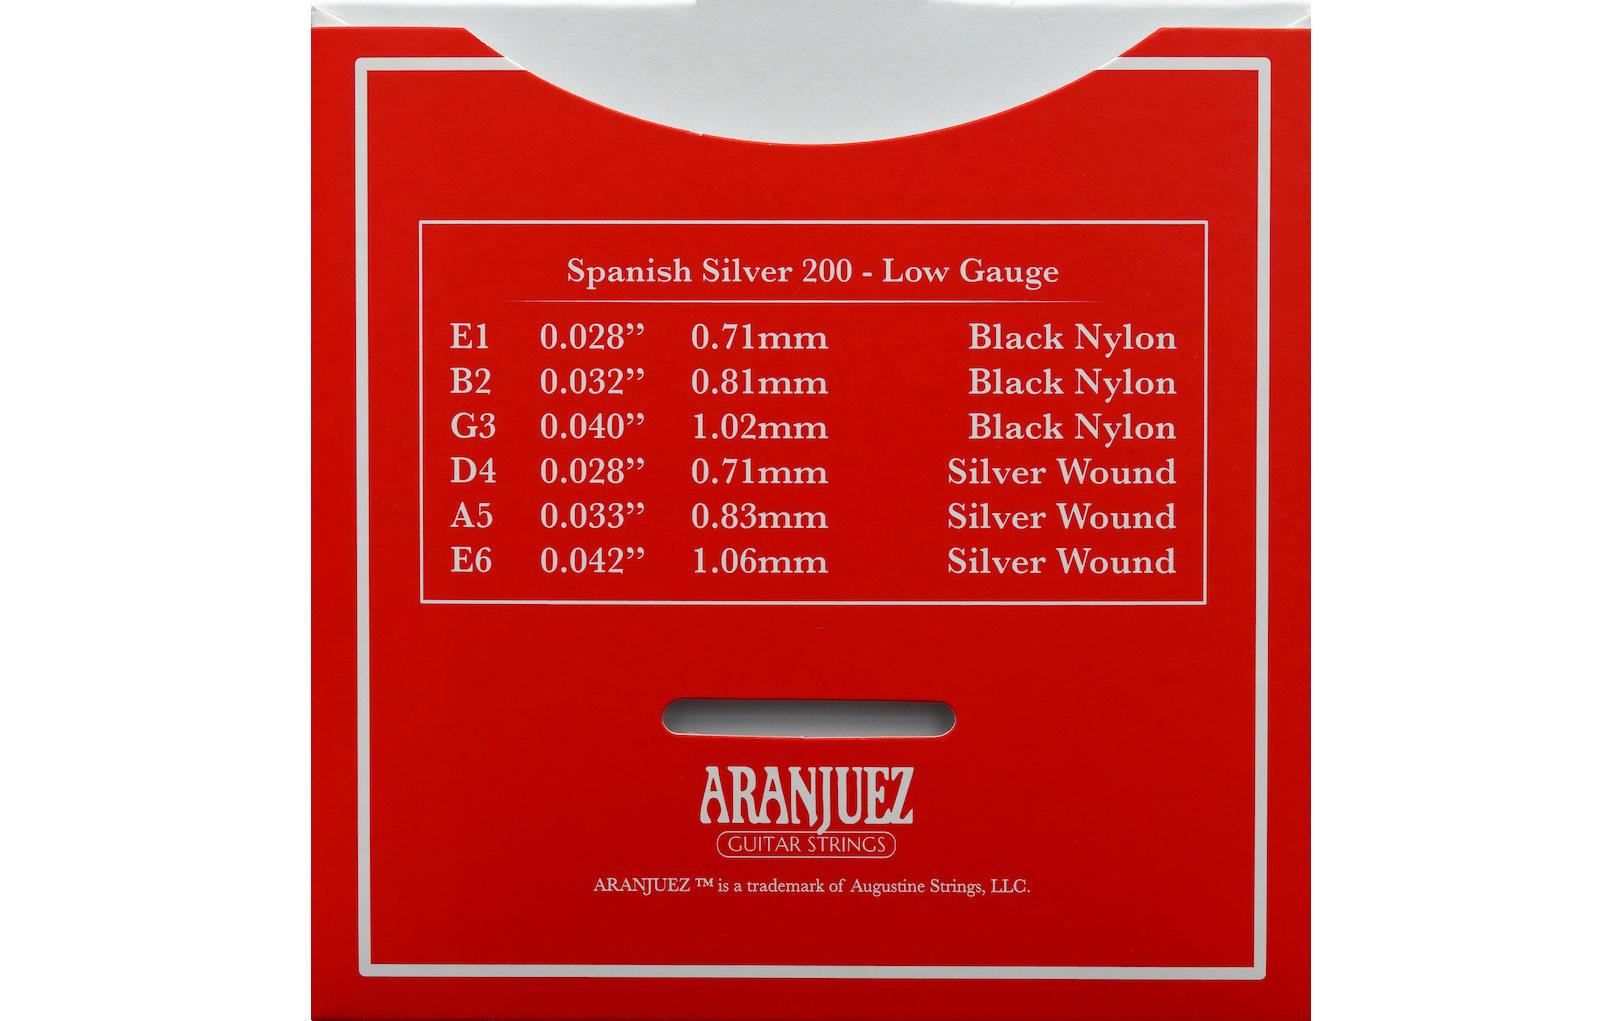 Aranjuez Gitarrensaiten Spanish Silver 200 – Low Gauge